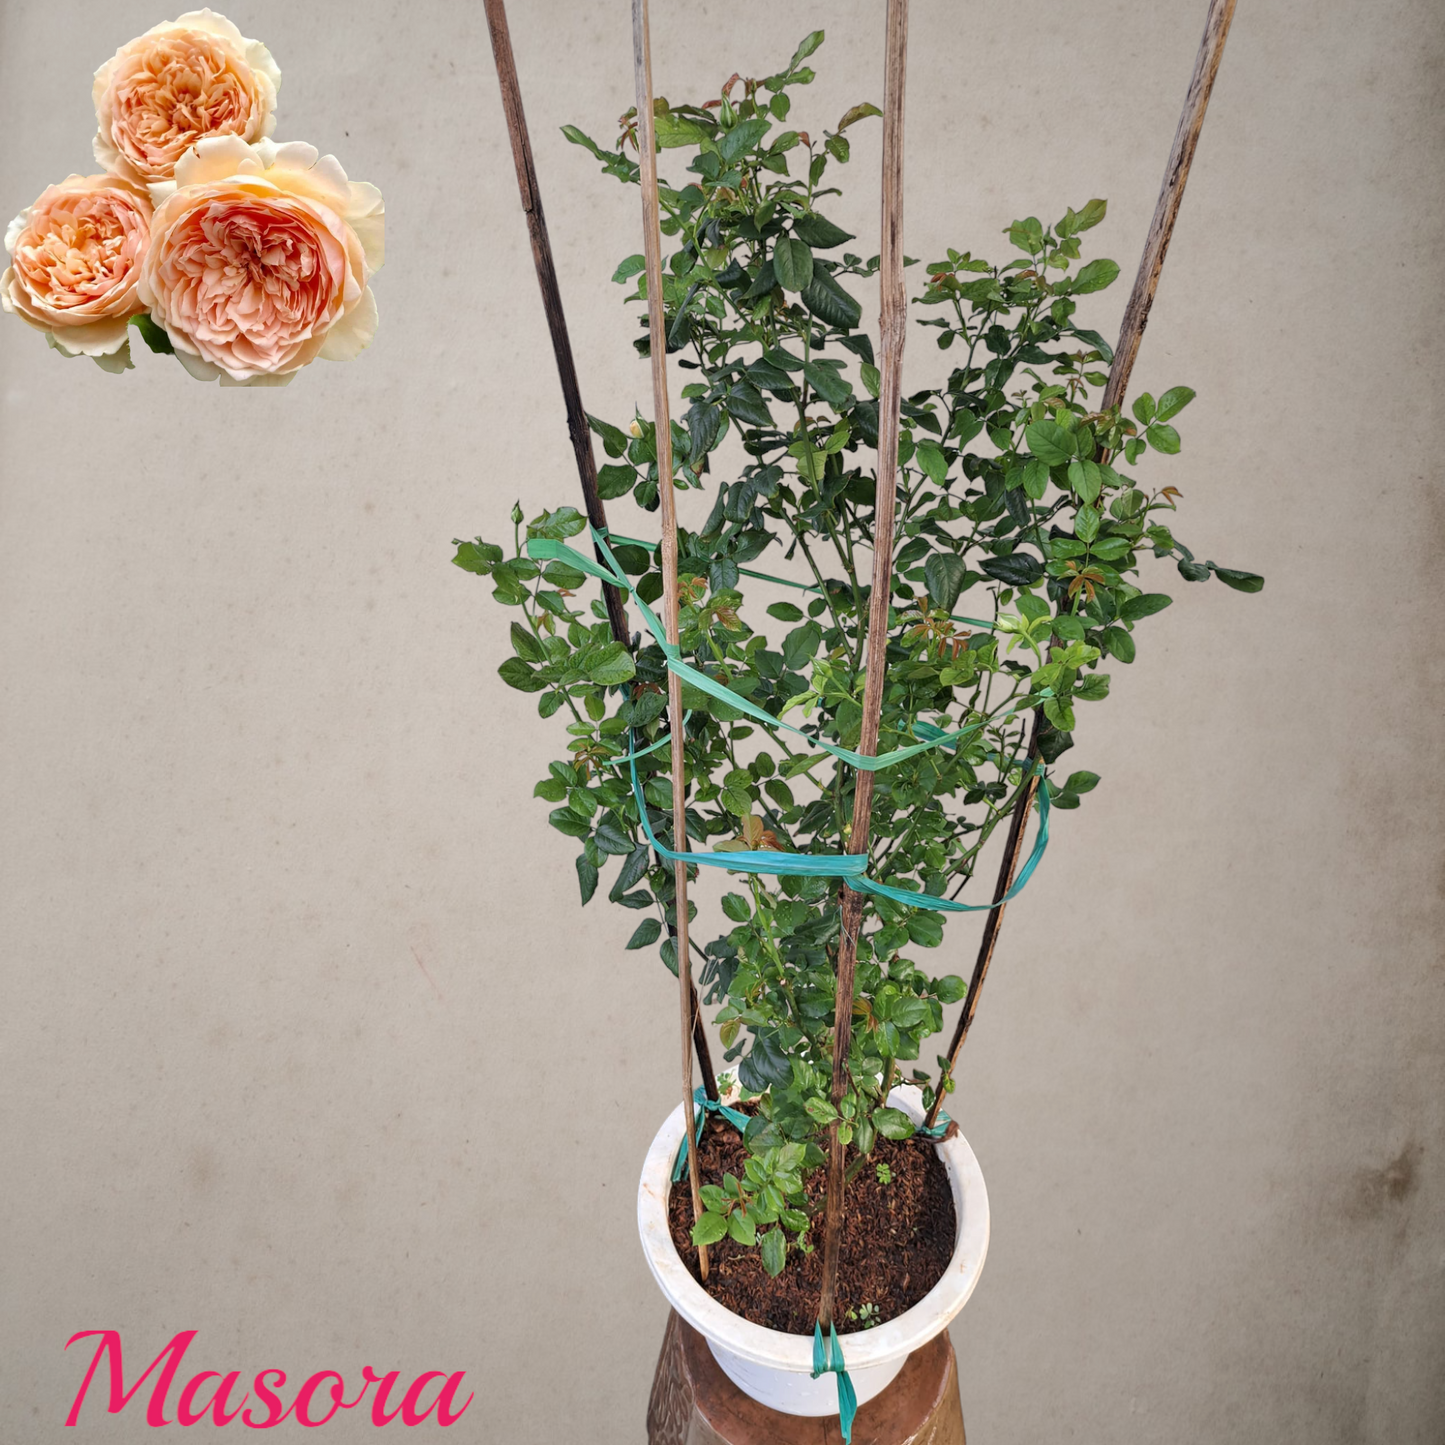 Masora- Potted Rose Plant